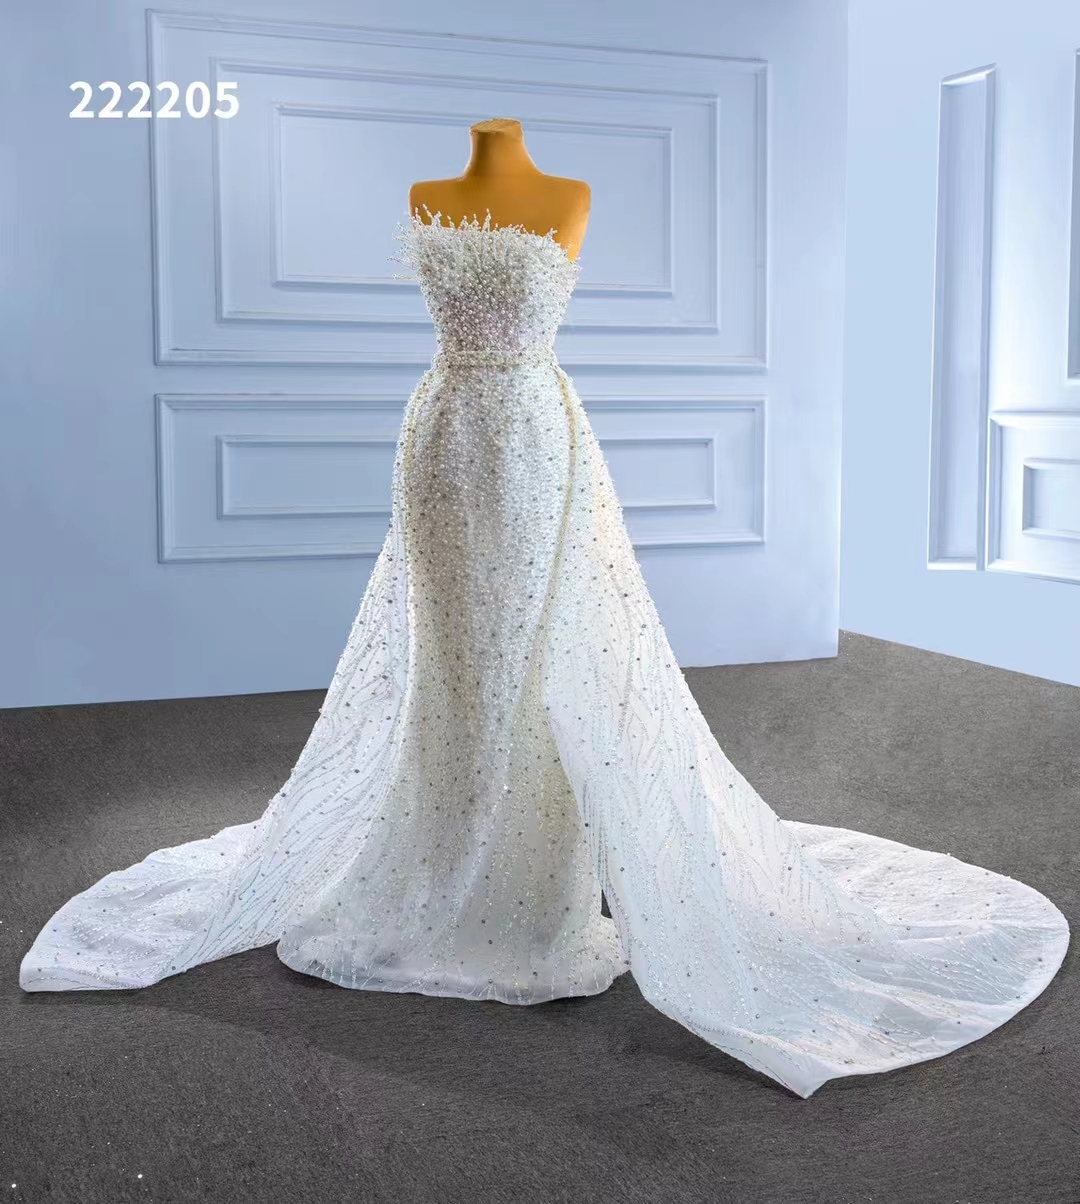 Mermaid Wedding dress Luxury strapless mermaid lace detachable train bride dress SM222205